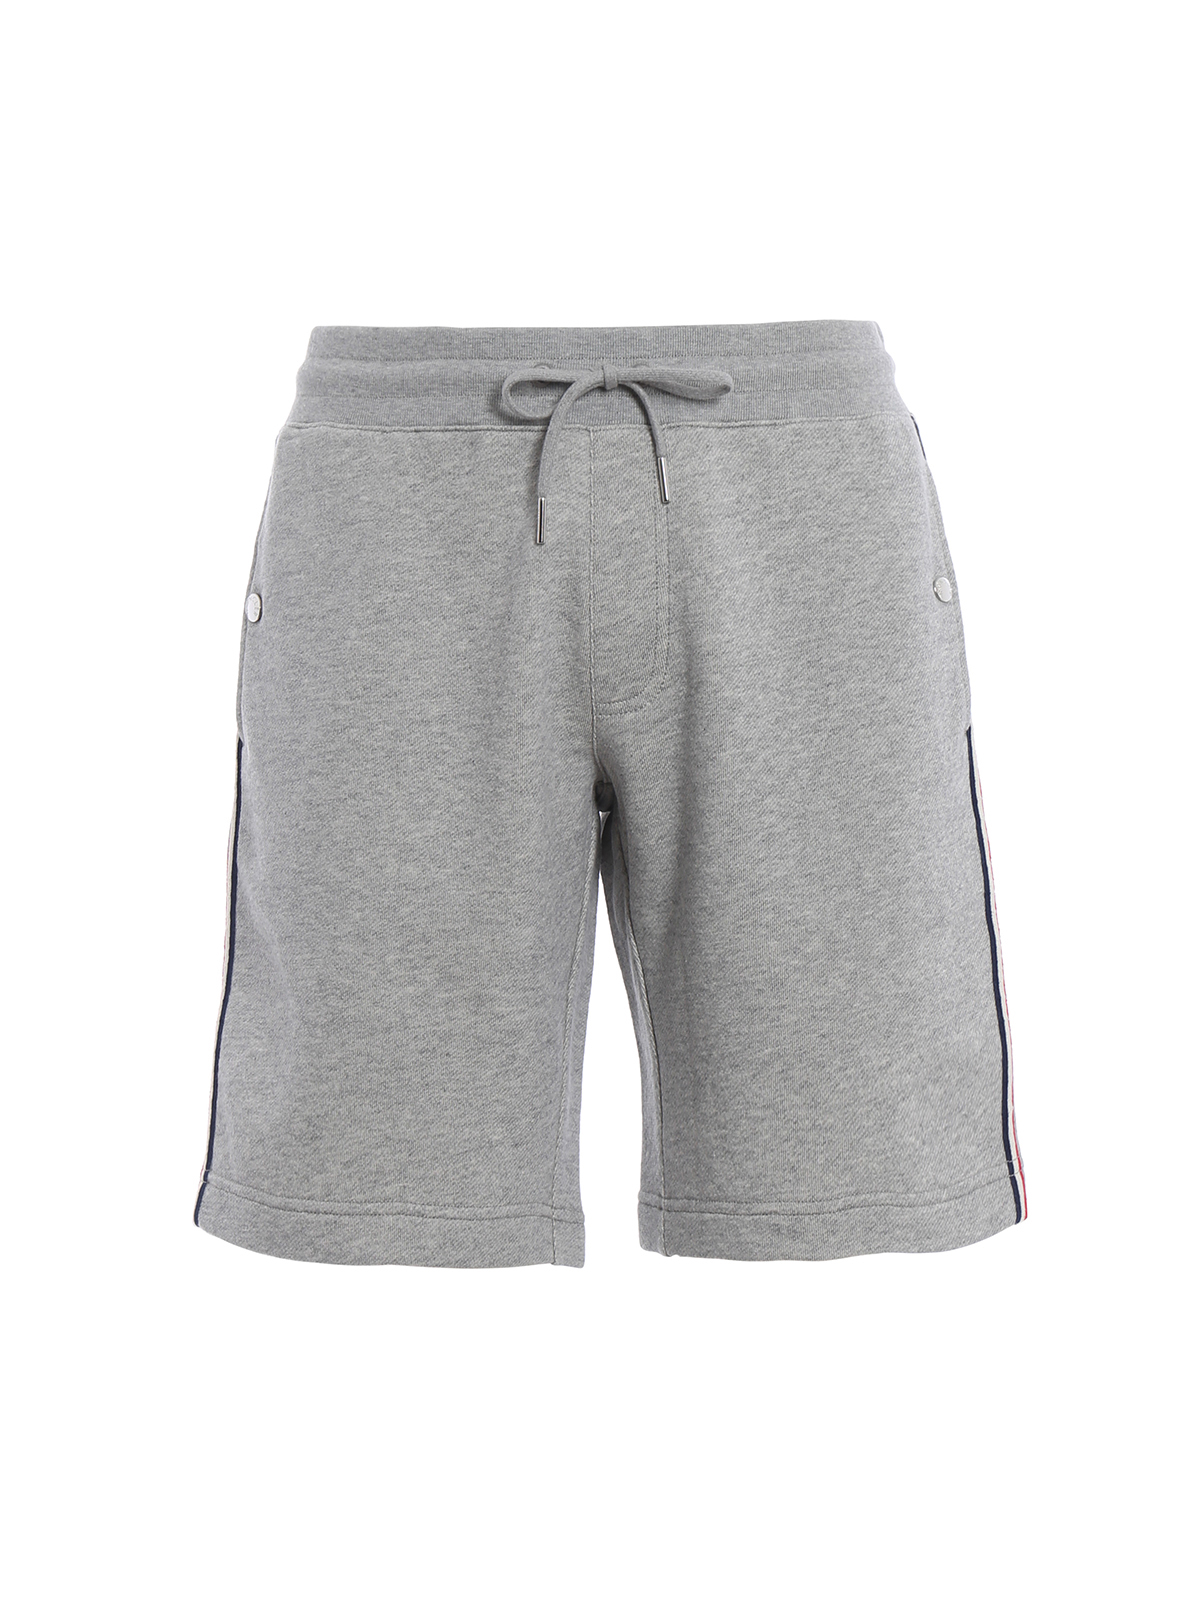 Moncler - Light grey short track pants 